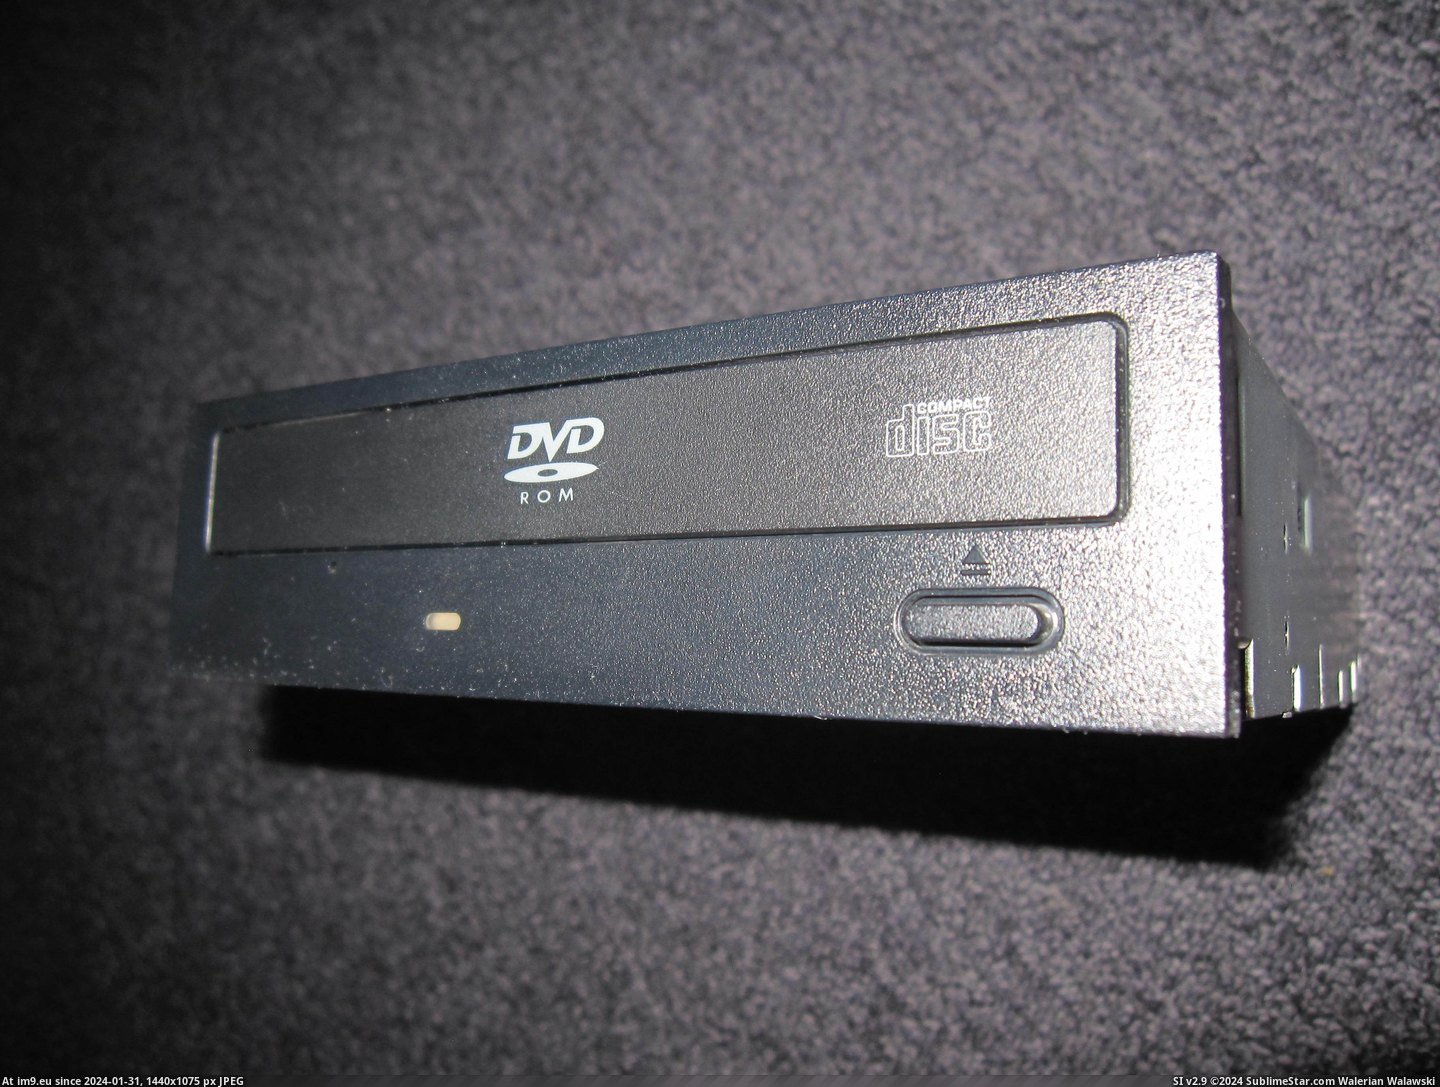 #Rom #Liteon #Sohd #Dvd HP Liteon SOHD-167T DVD ROM IMG_1374 Pic. (Изображение из альбом DVD-ROM))